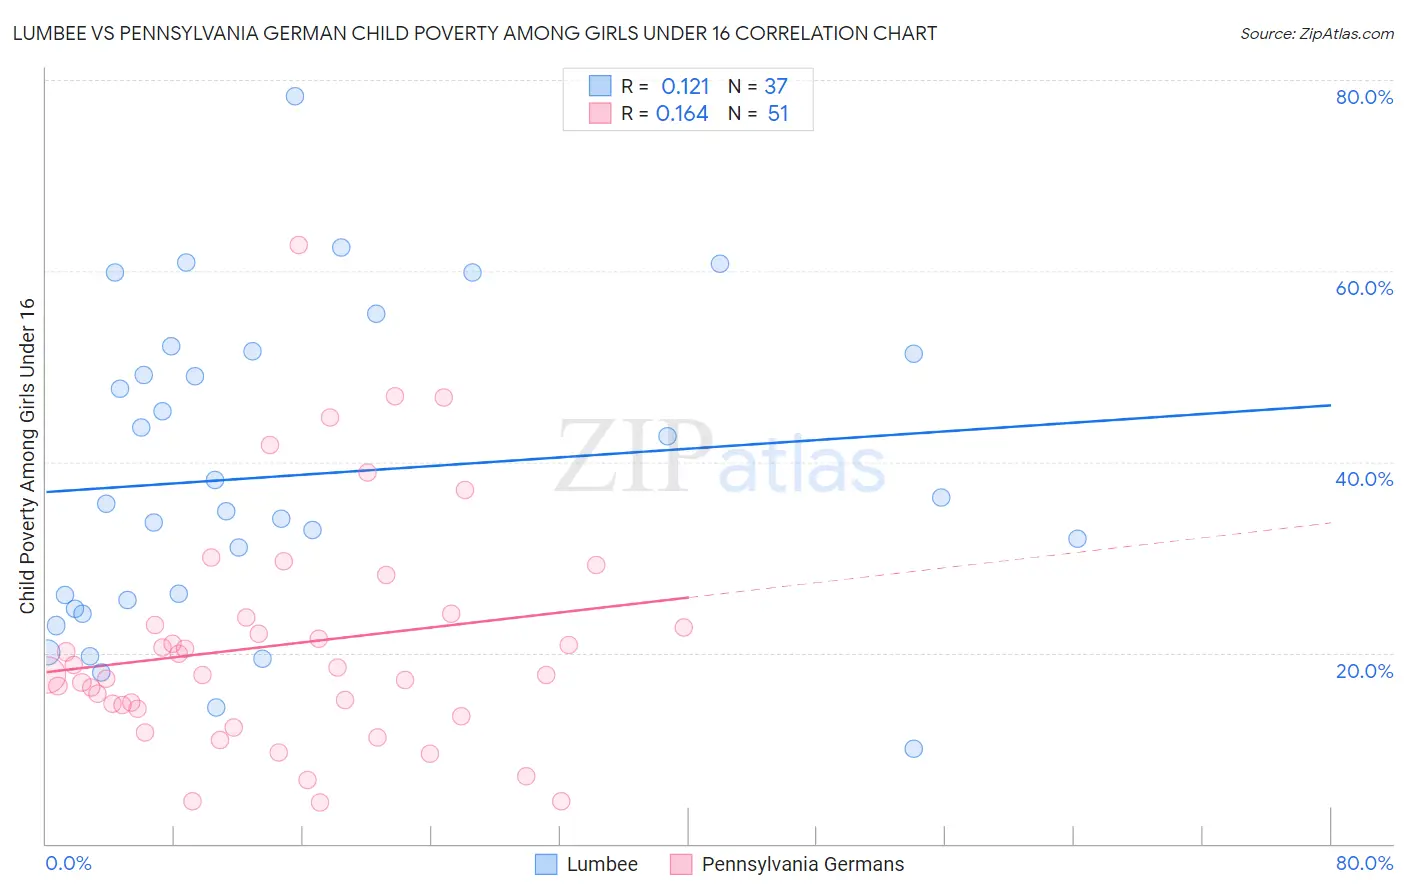 Lumbee vs Pennsylvania German Child Poverty Among Girls Under 16